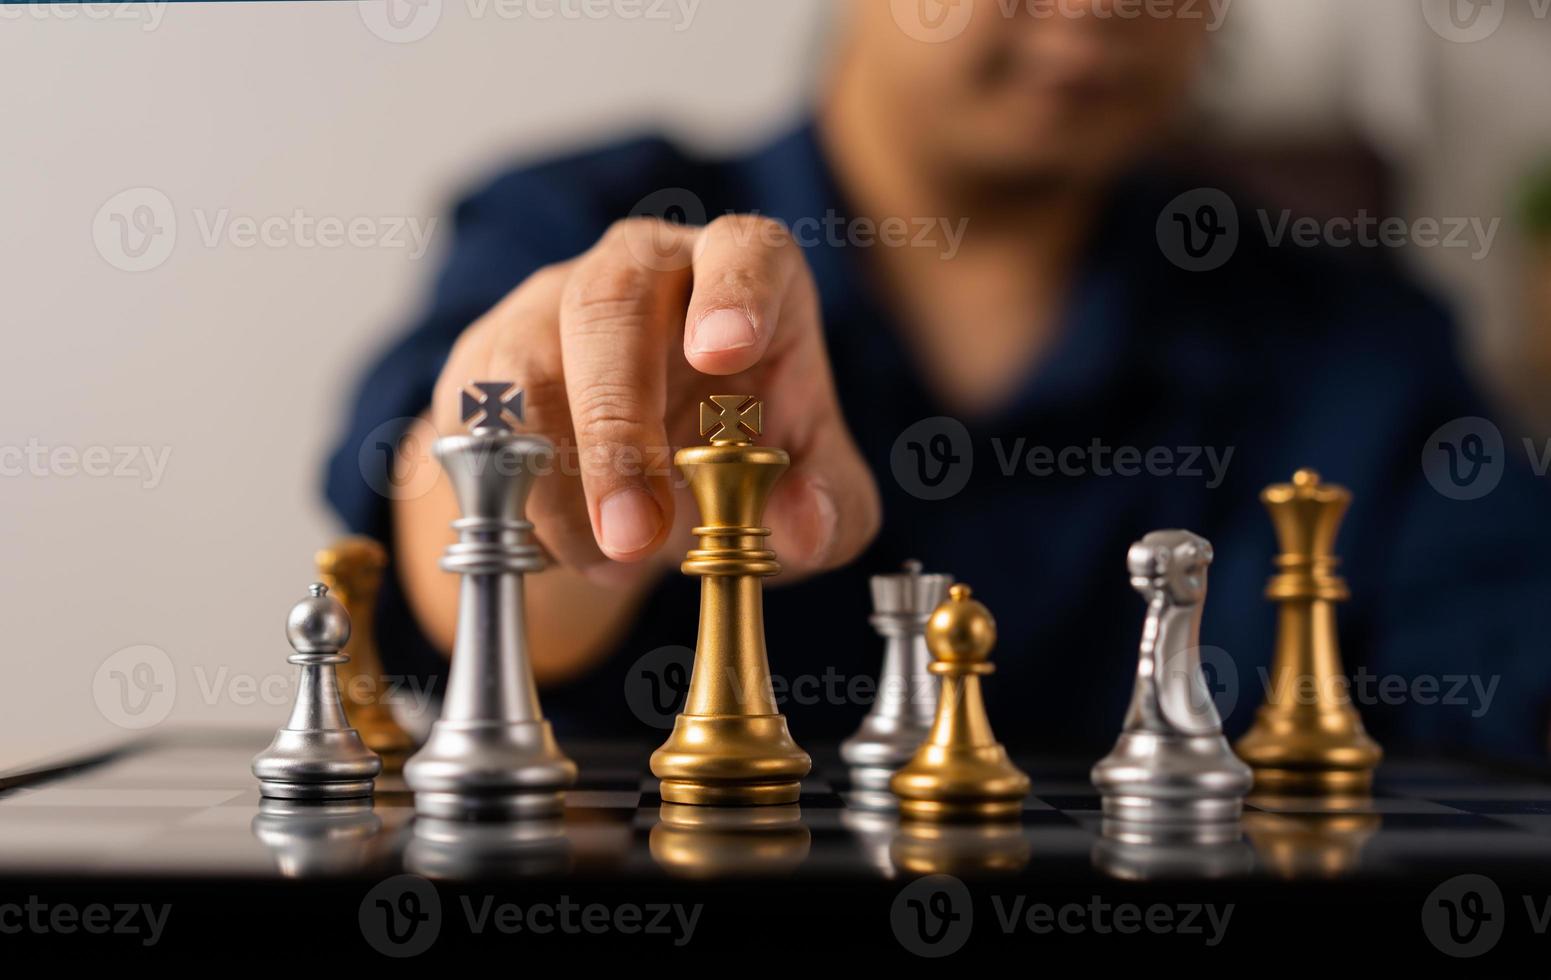 rei de xadrez dourado sozinho no tabuleiro de xadrez 7291724 Foto